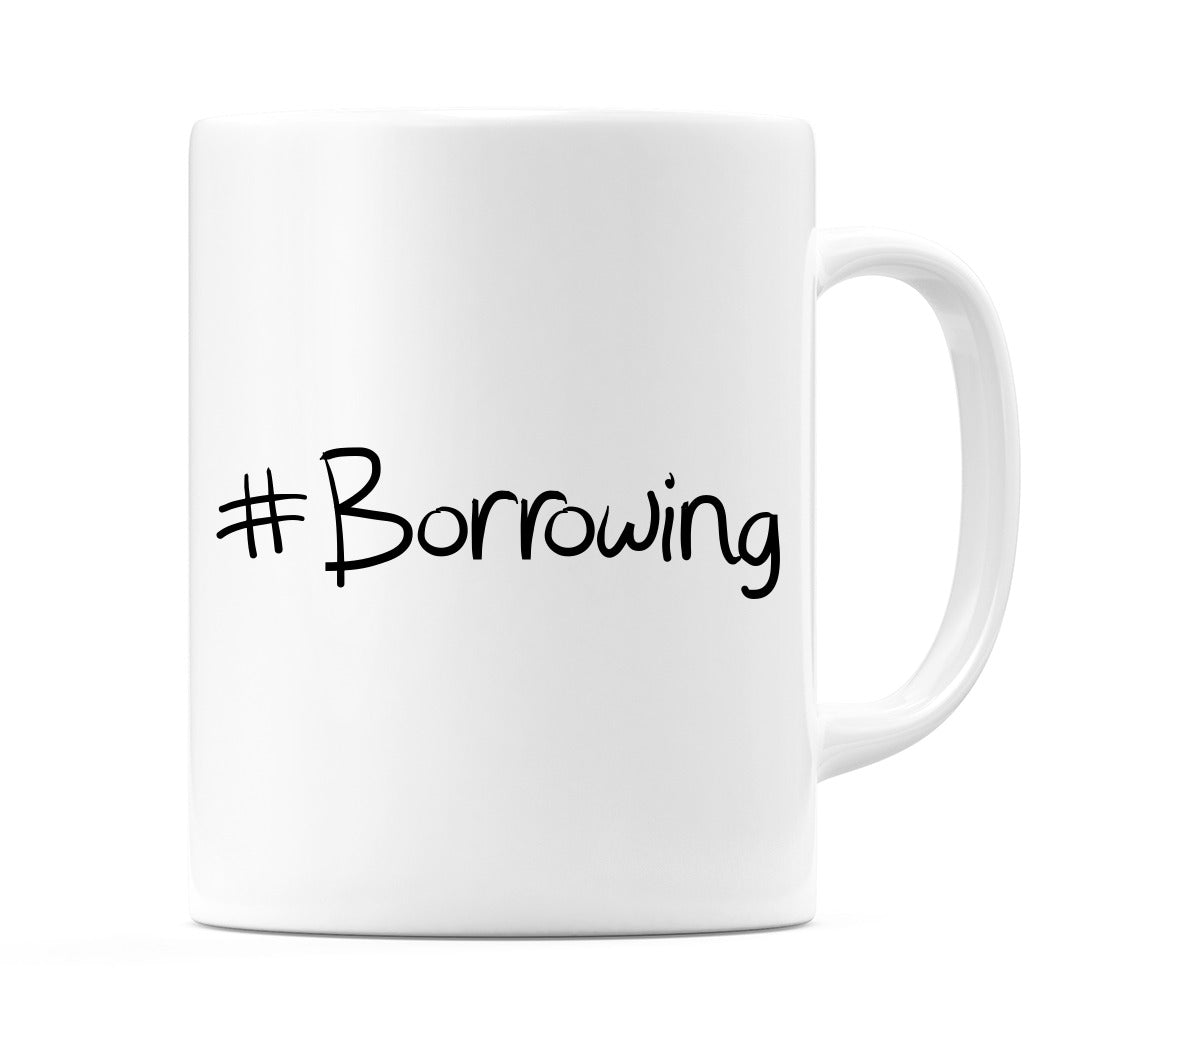 #Borrowing Mug